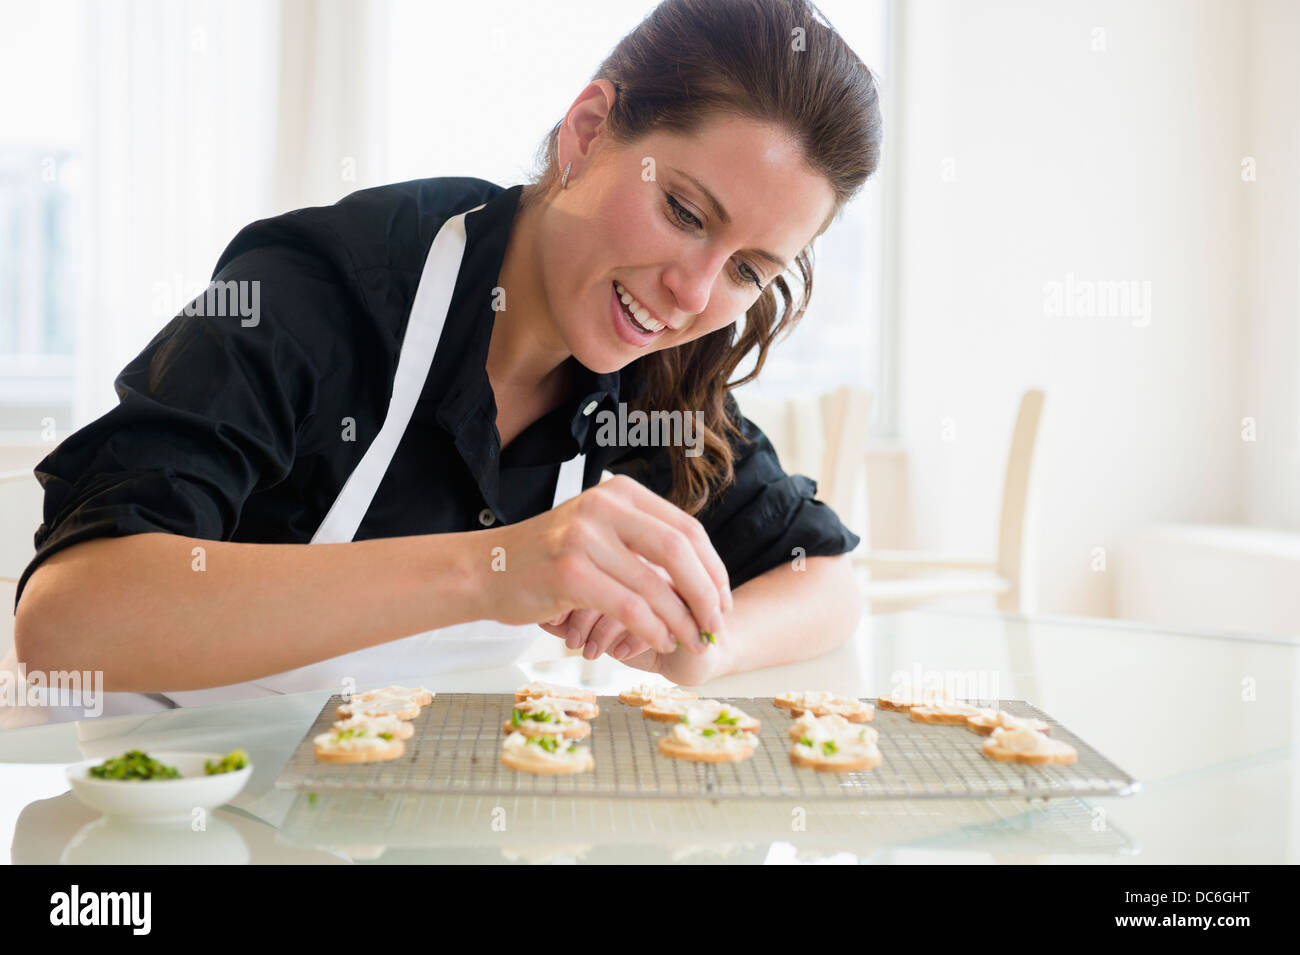 Portrait of woman preparing food Stock Photo